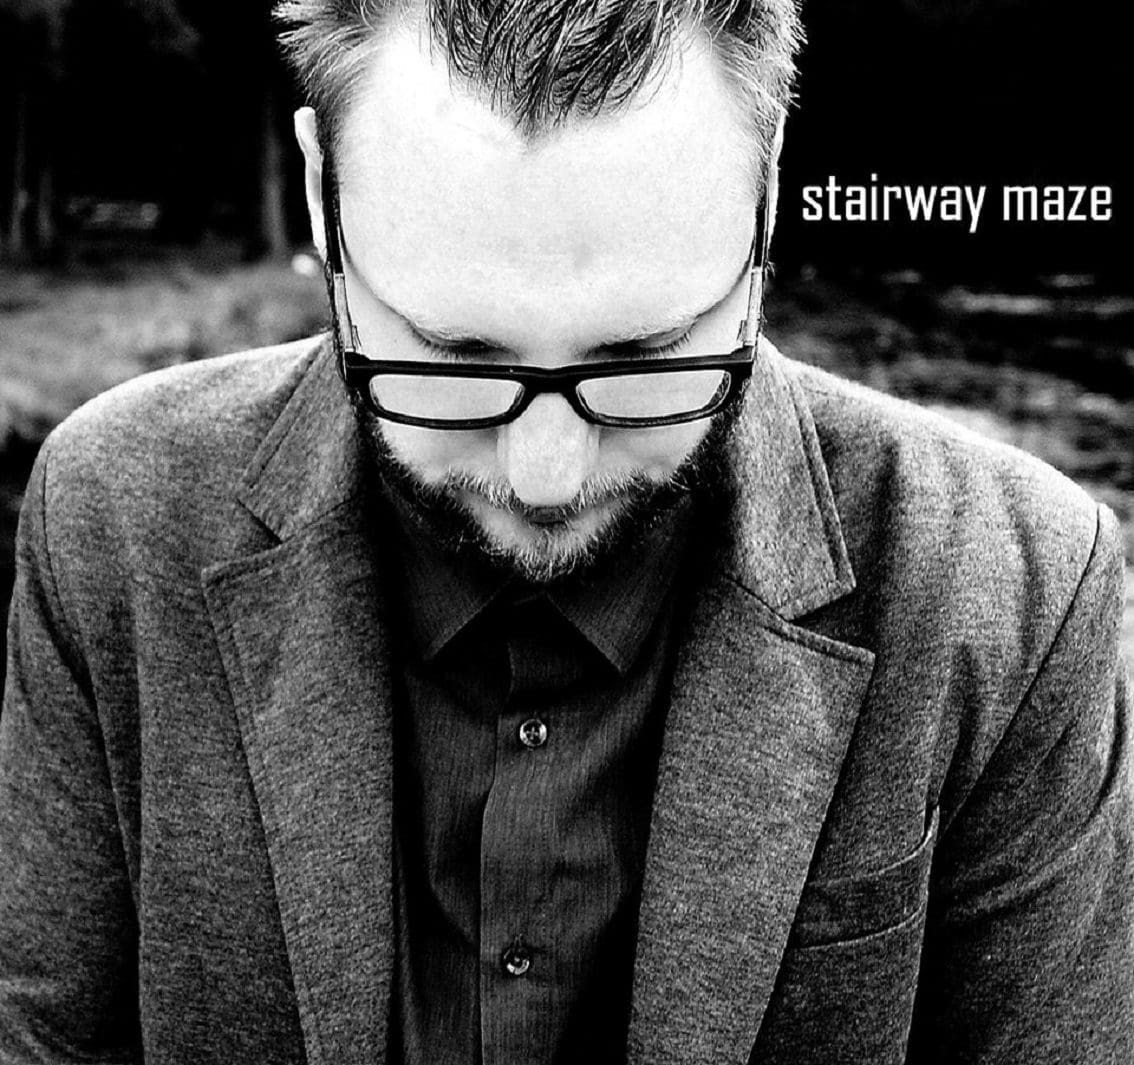 Stairway Maze – Decision Fatigue (album – Scentair Records)